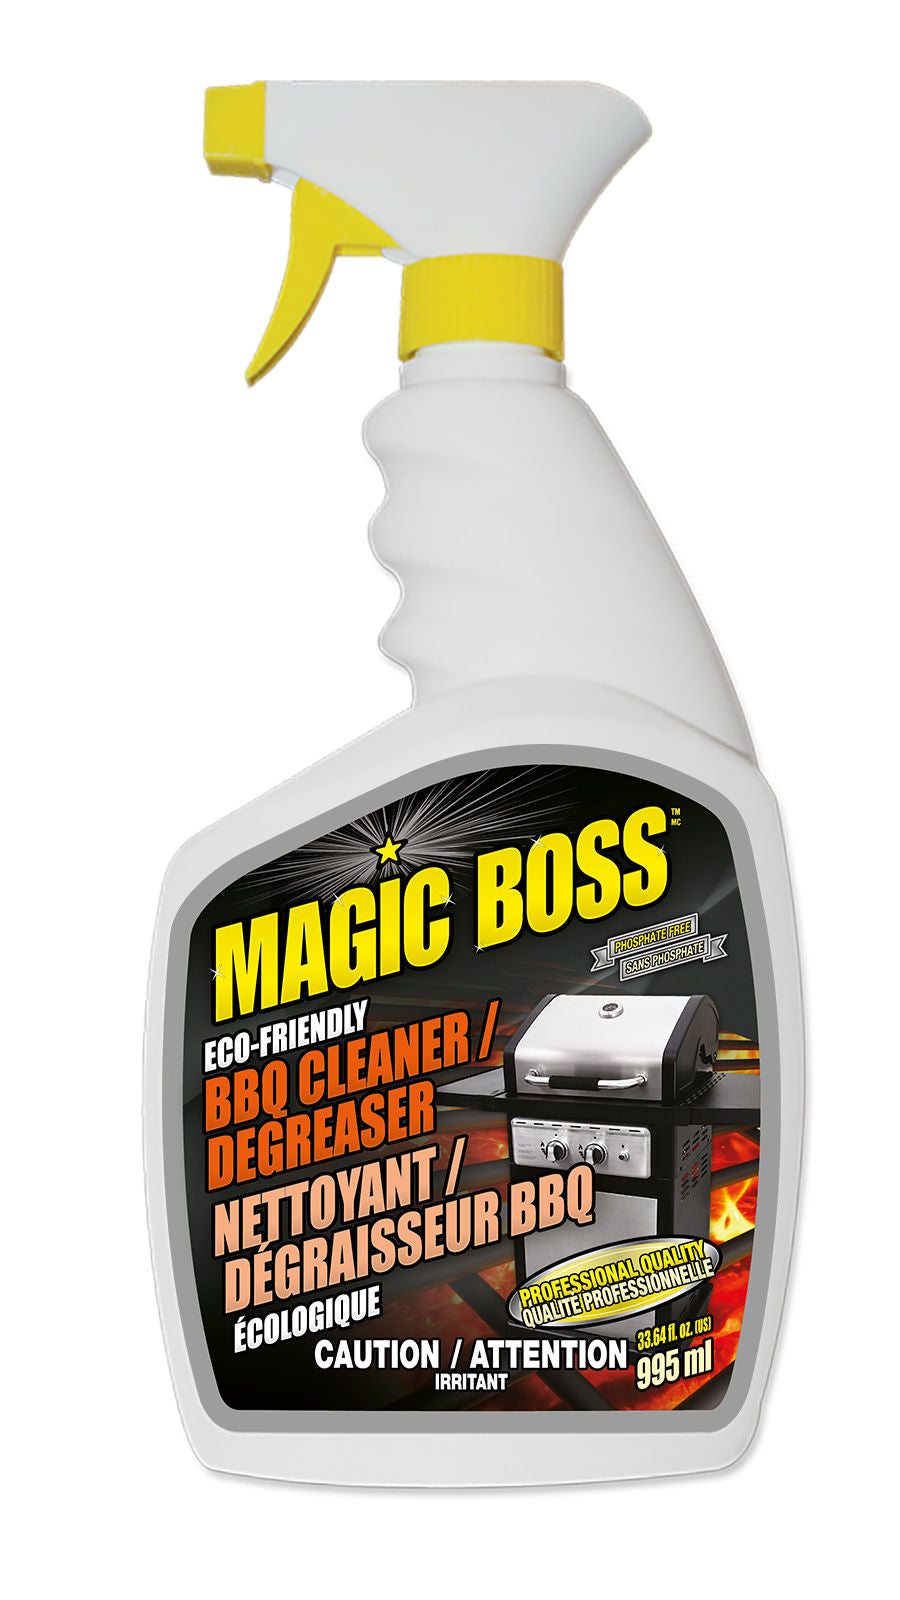 Magic Boss 2900 - Box of 12, Bbq cleaner / degreaser (995 ml)